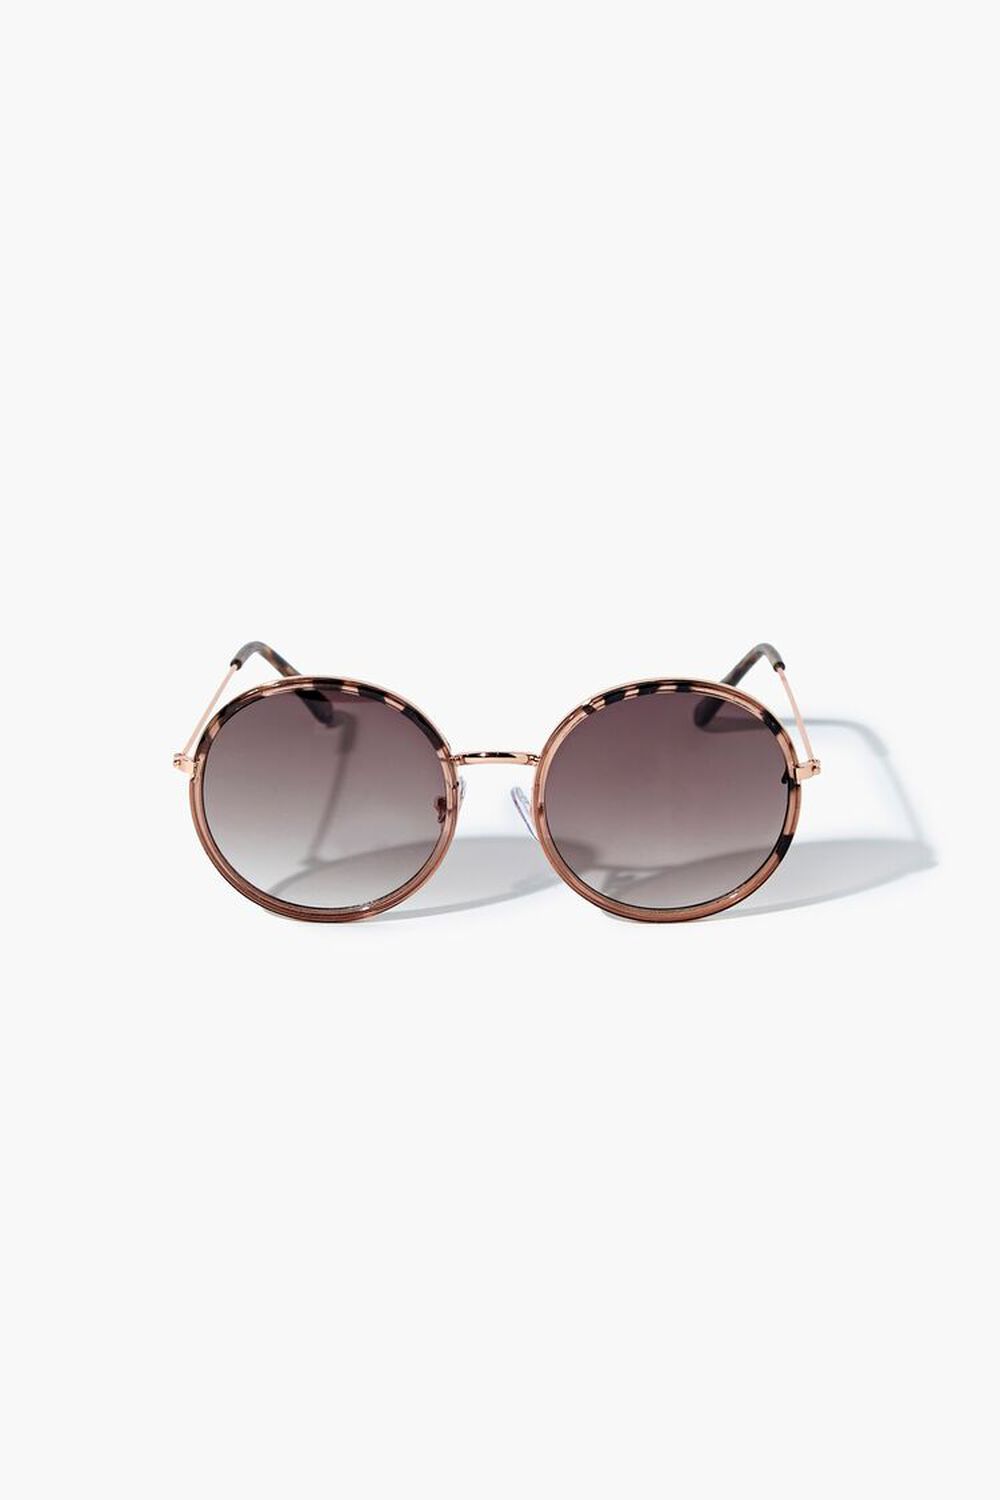 BLUSH/BROWN Round Frame Sunglasses, image 1